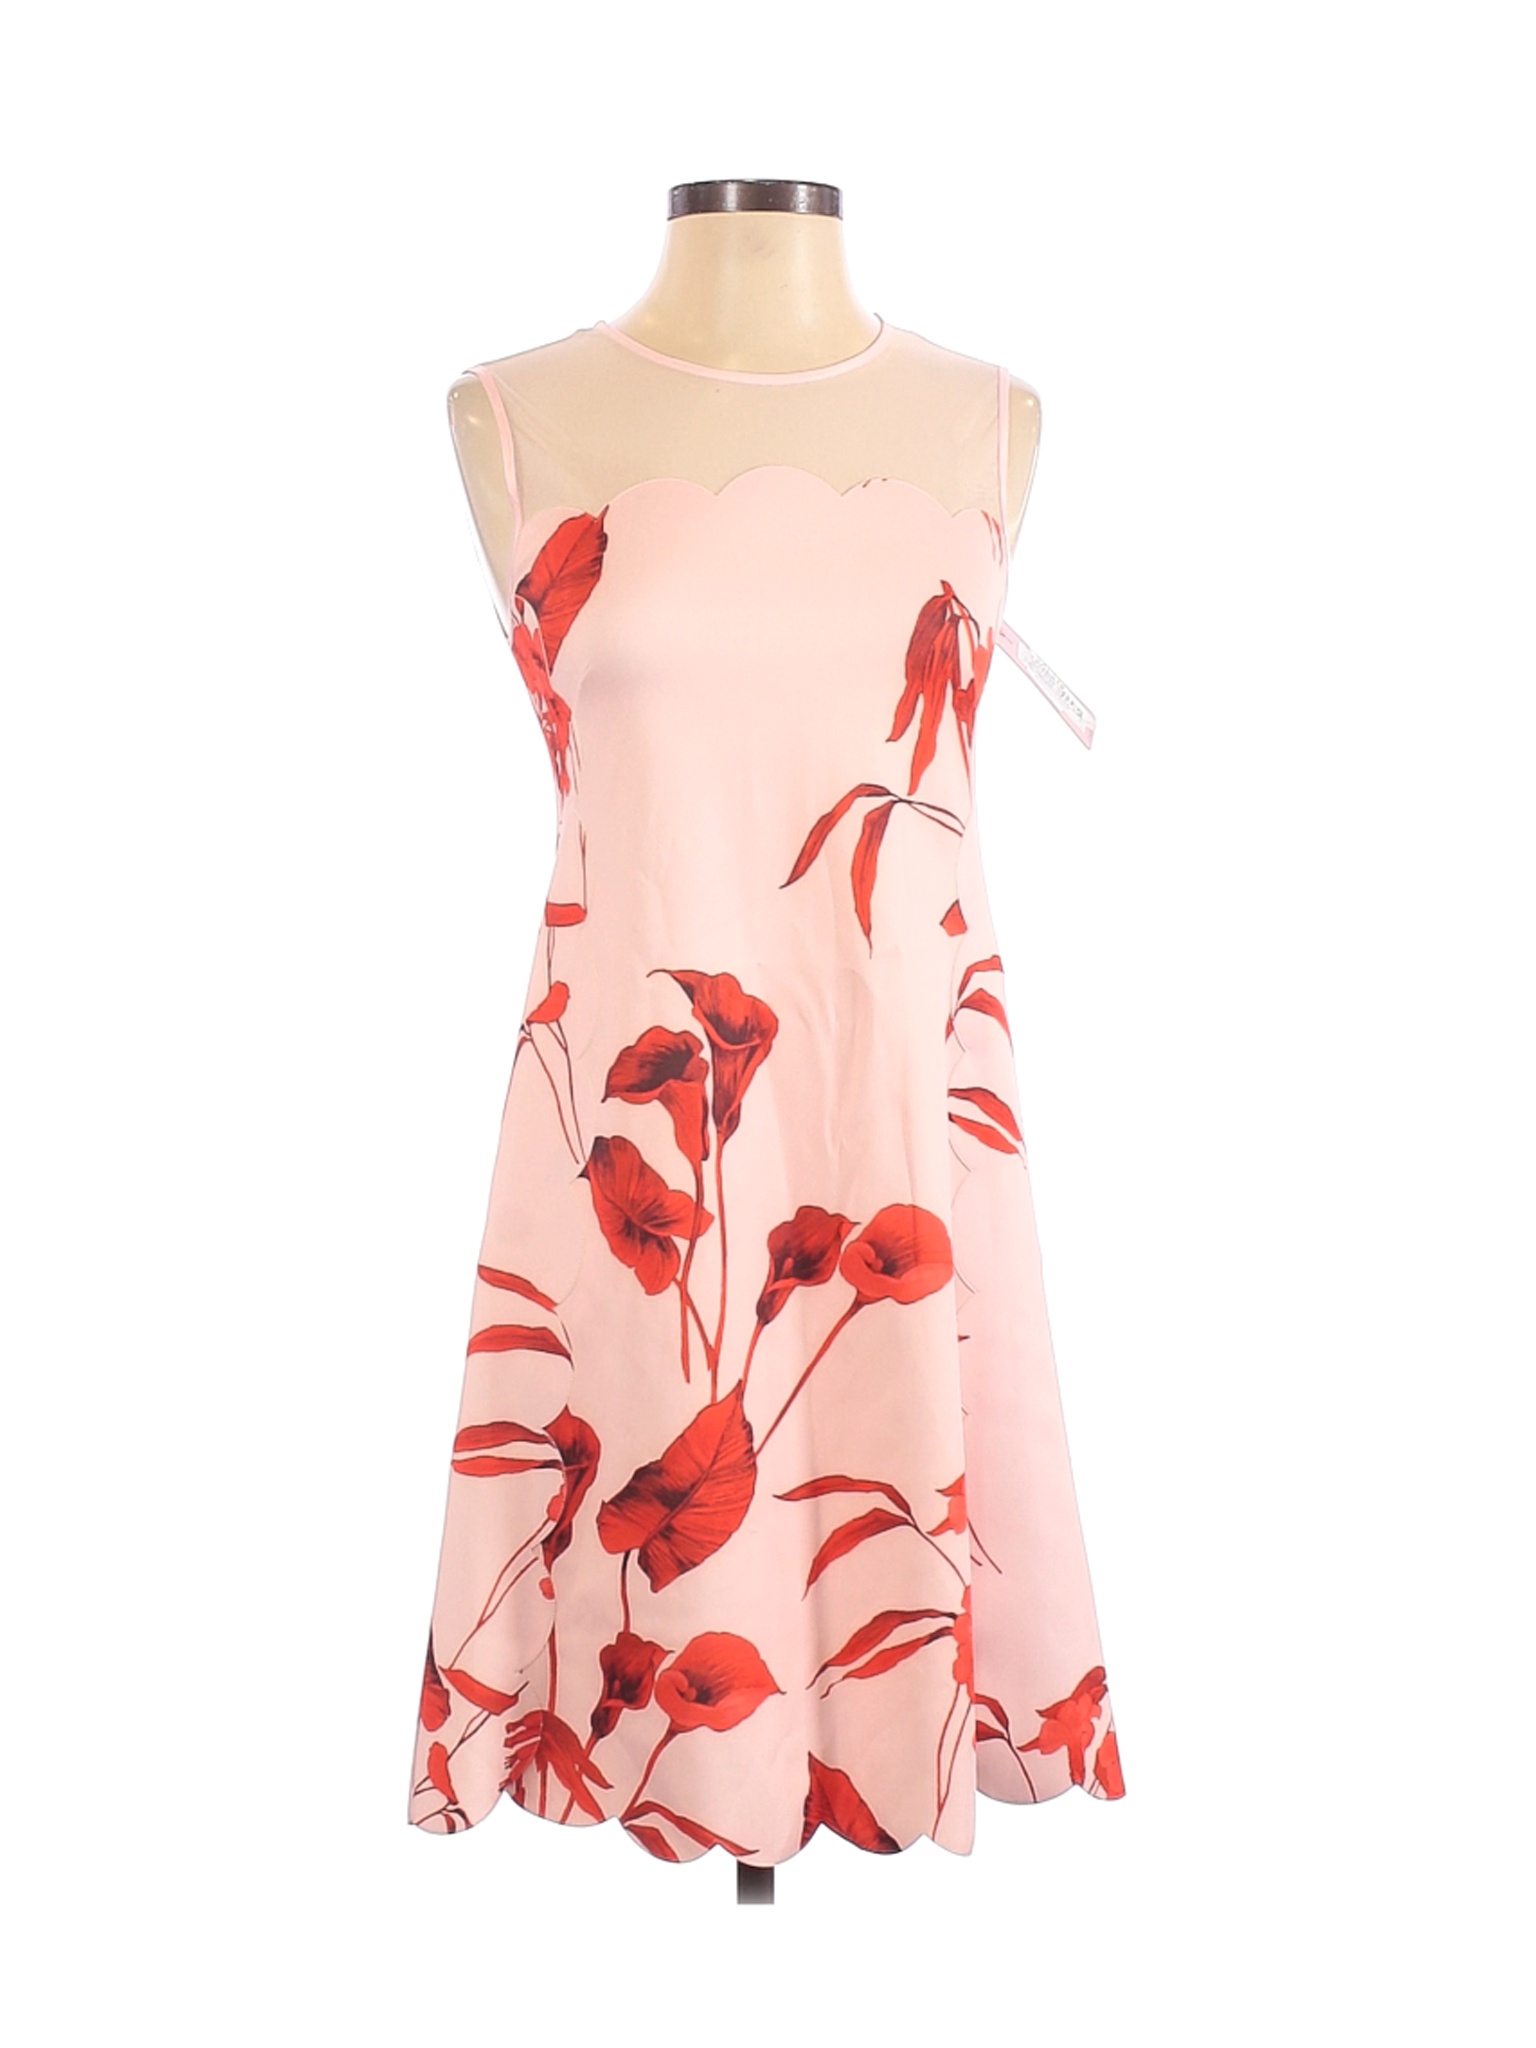 NWT Ted Baker London Women Pink Cocktail Dress 2 | eBay